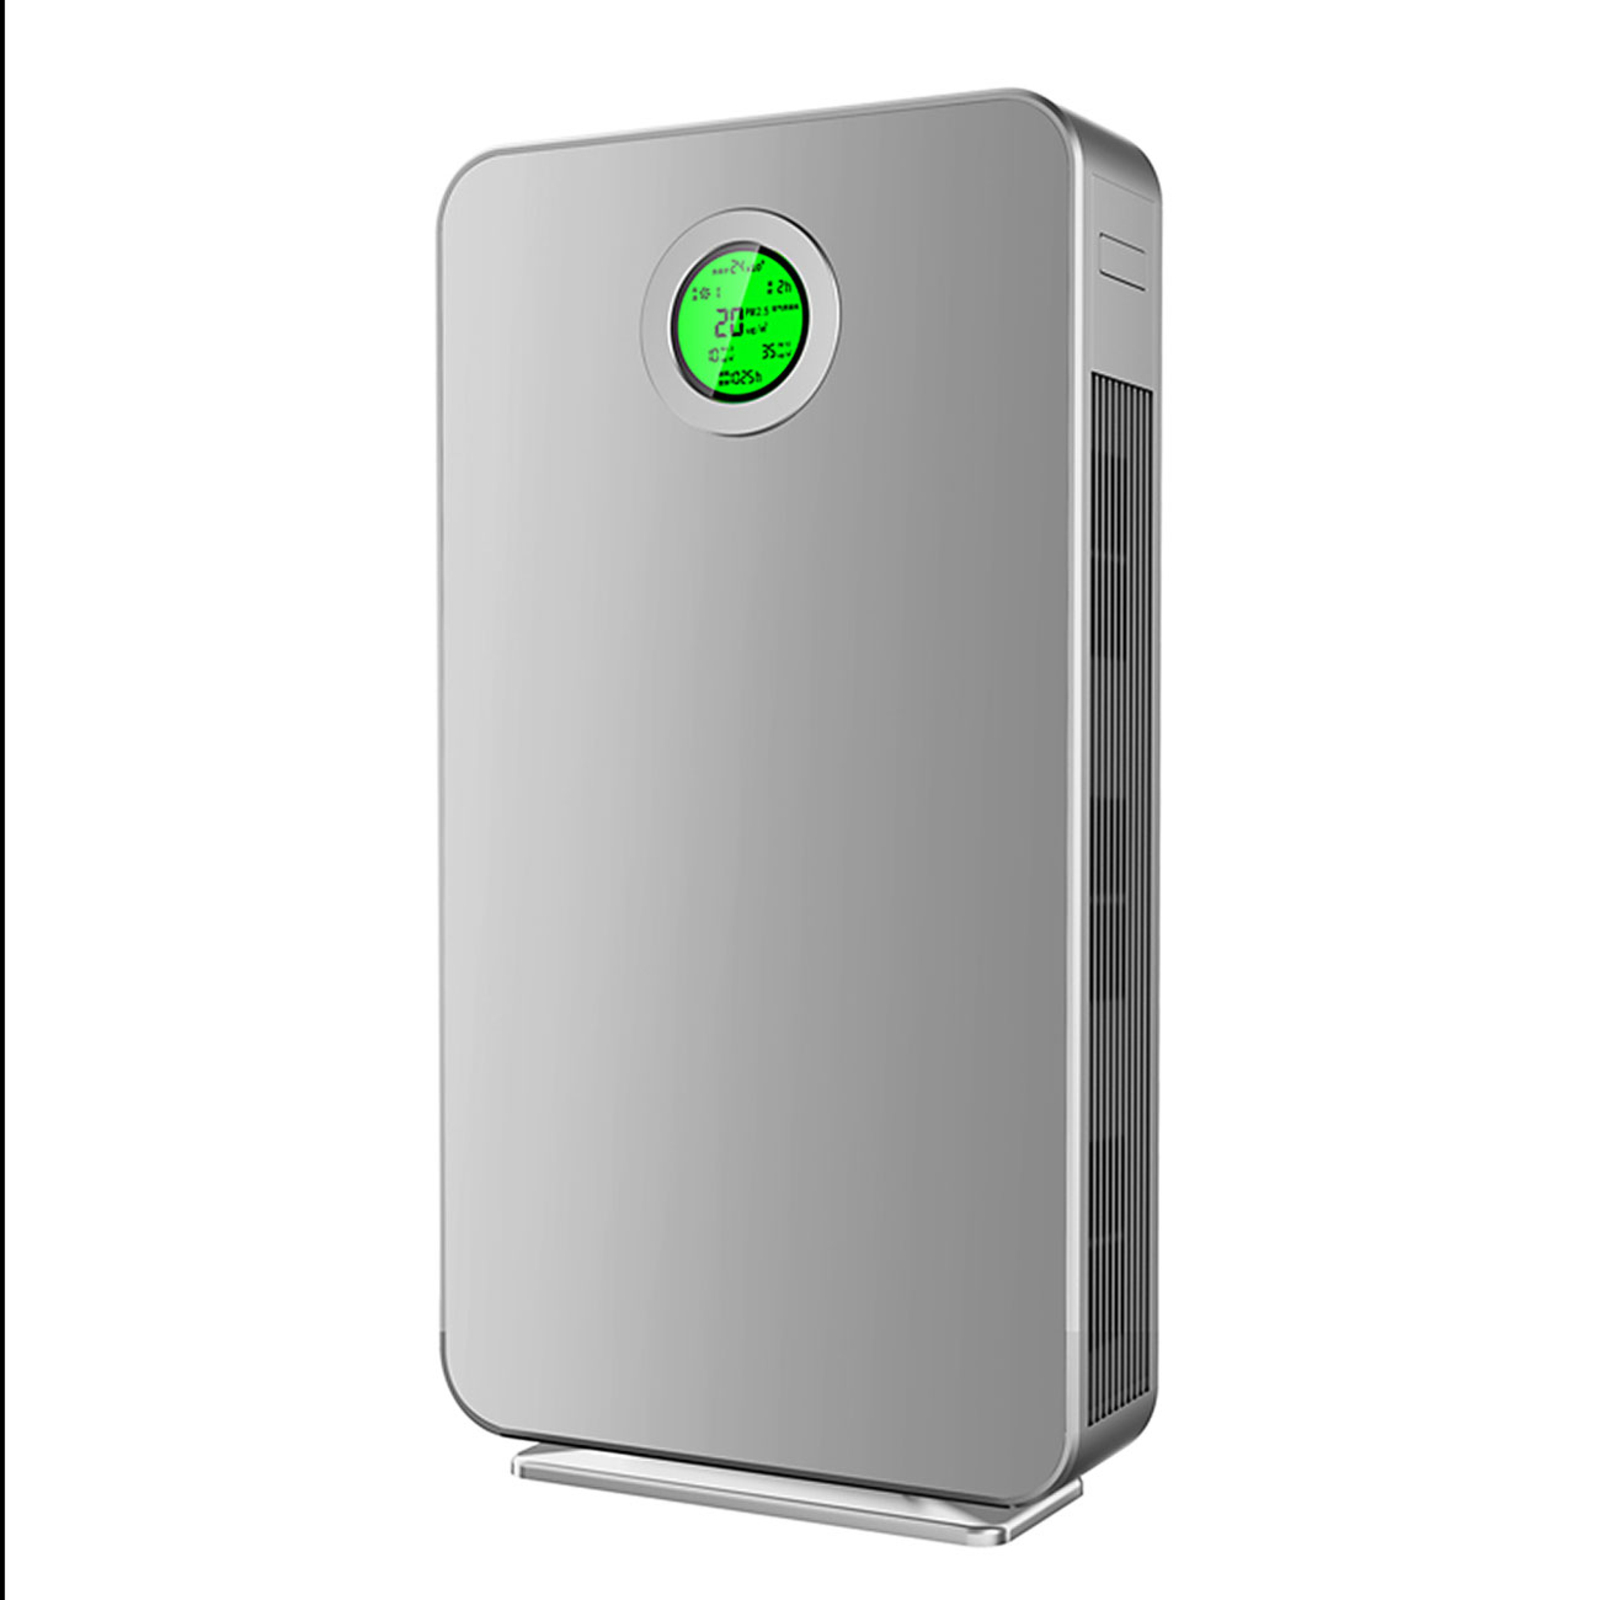 NEVOOX LF 2020 UV-C air cleaner